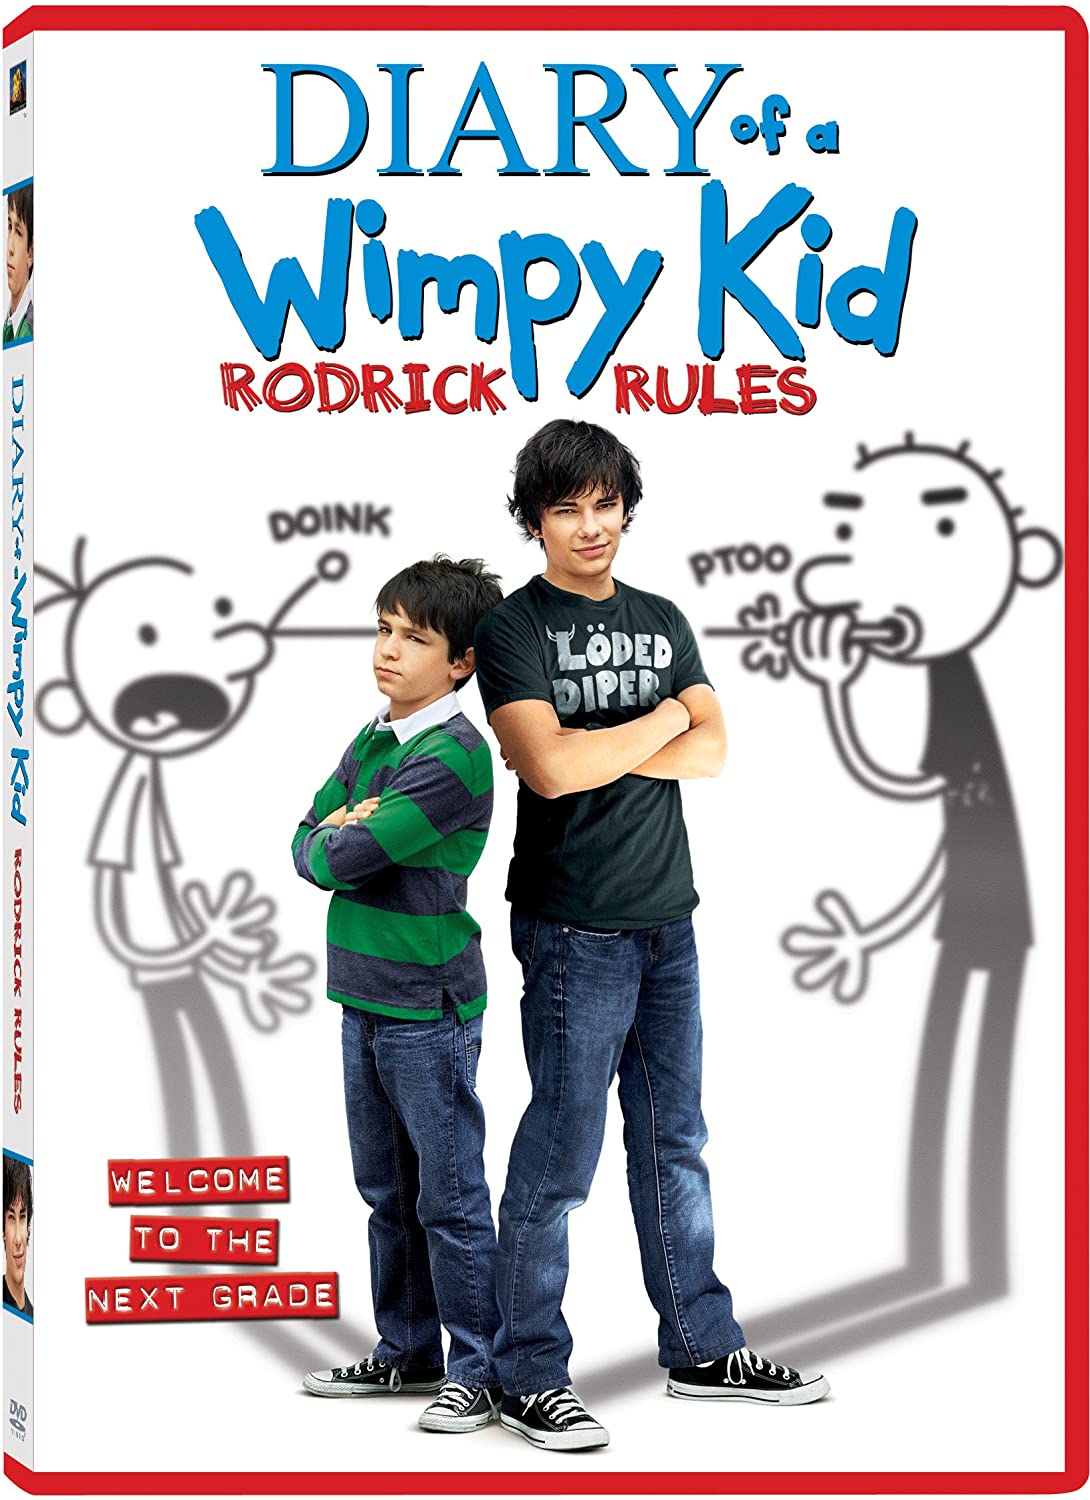 Diary of a Wimpy Kid: Rodrick Rules Bilingual Import: Amazon.ca